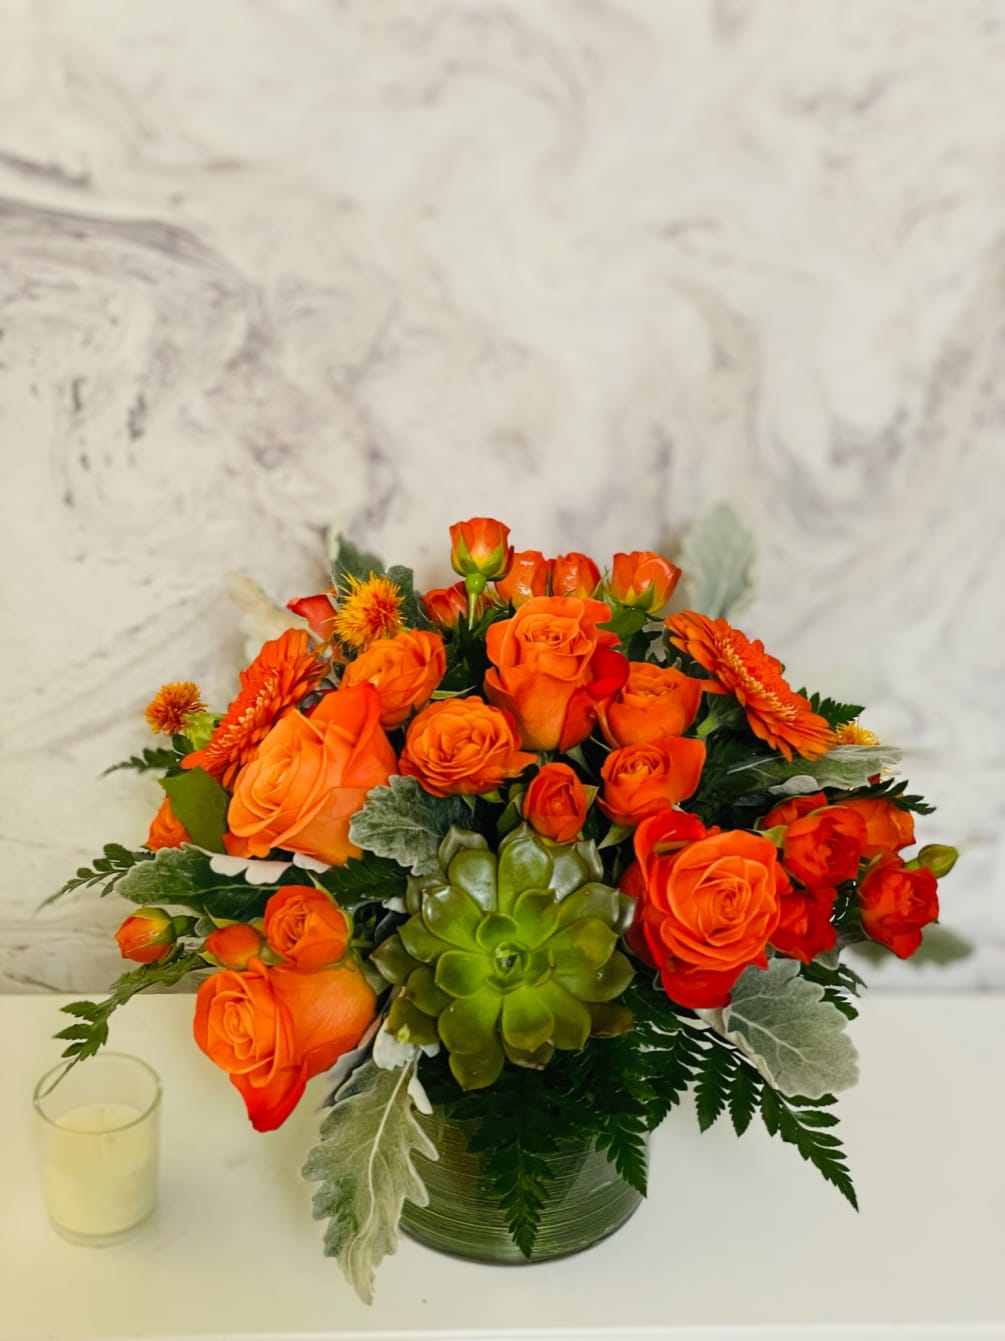 This beautiful orange bouquet has orange roses, spray roses, gerbera daisies, dusty